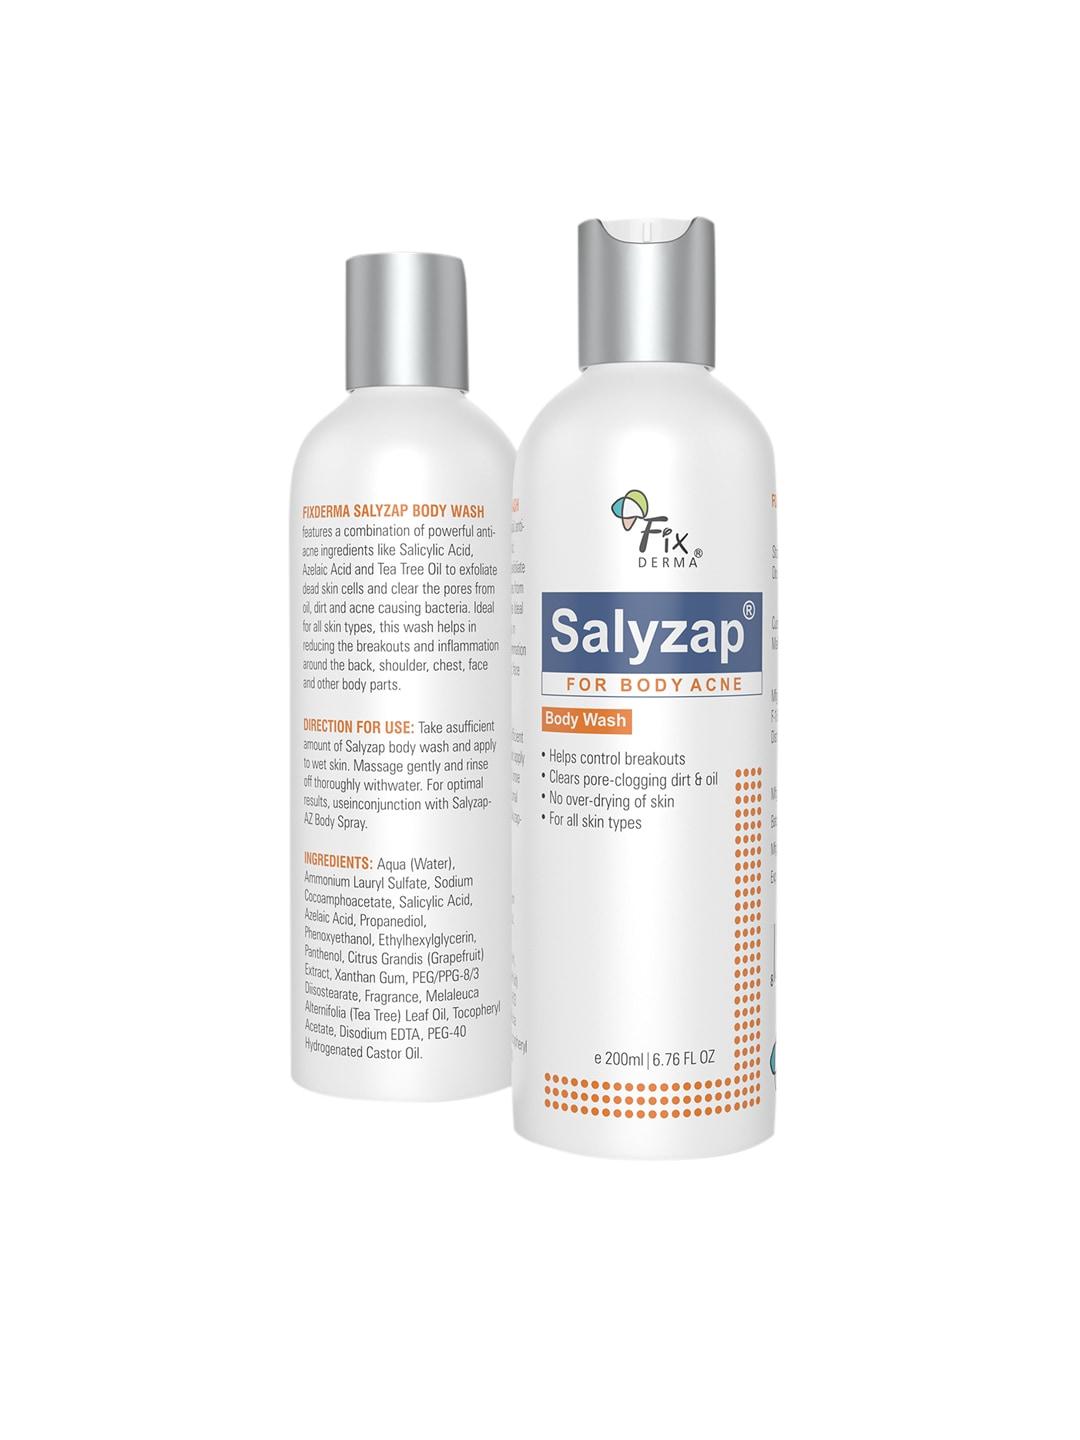 FIXDERMA 2% Salicylic Acid Salyzap Body Wash For Back Upper Arms Acne - 200ml